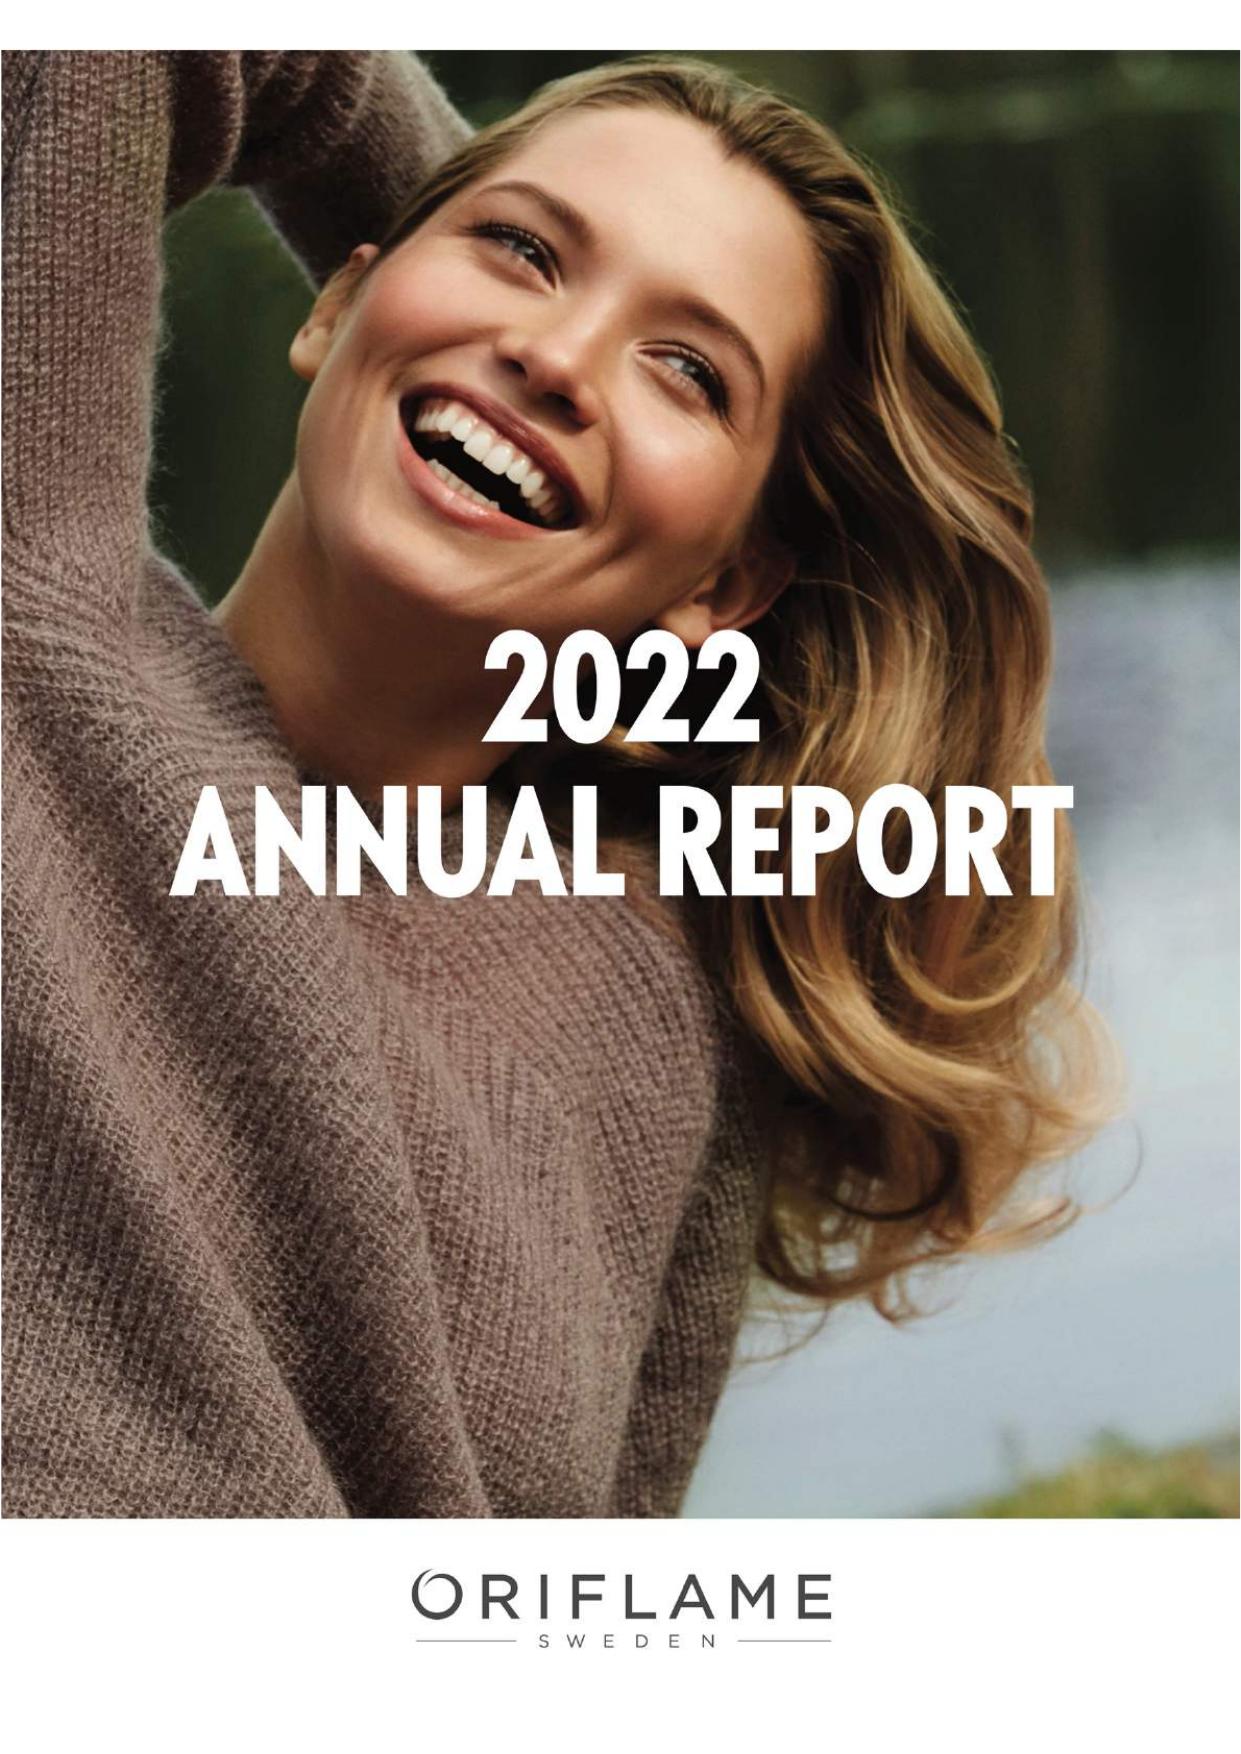 ABERDEENAIRPORT 2022 Annual Report